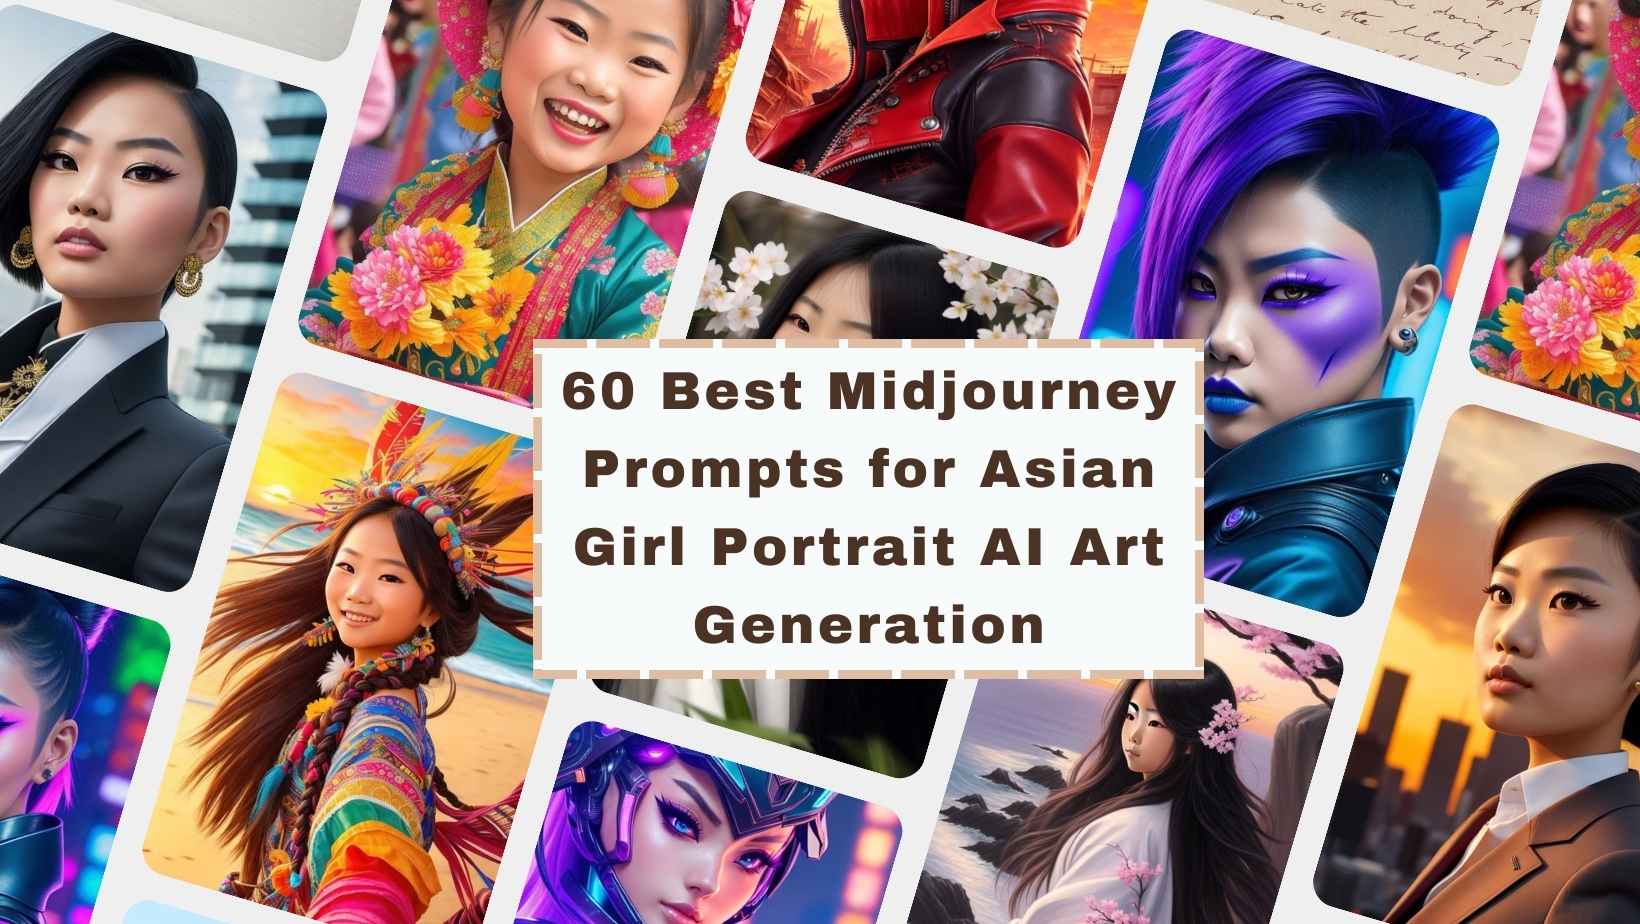 60 Best Midjourney Prompts for Asian Girl Portrait AI Art Generation